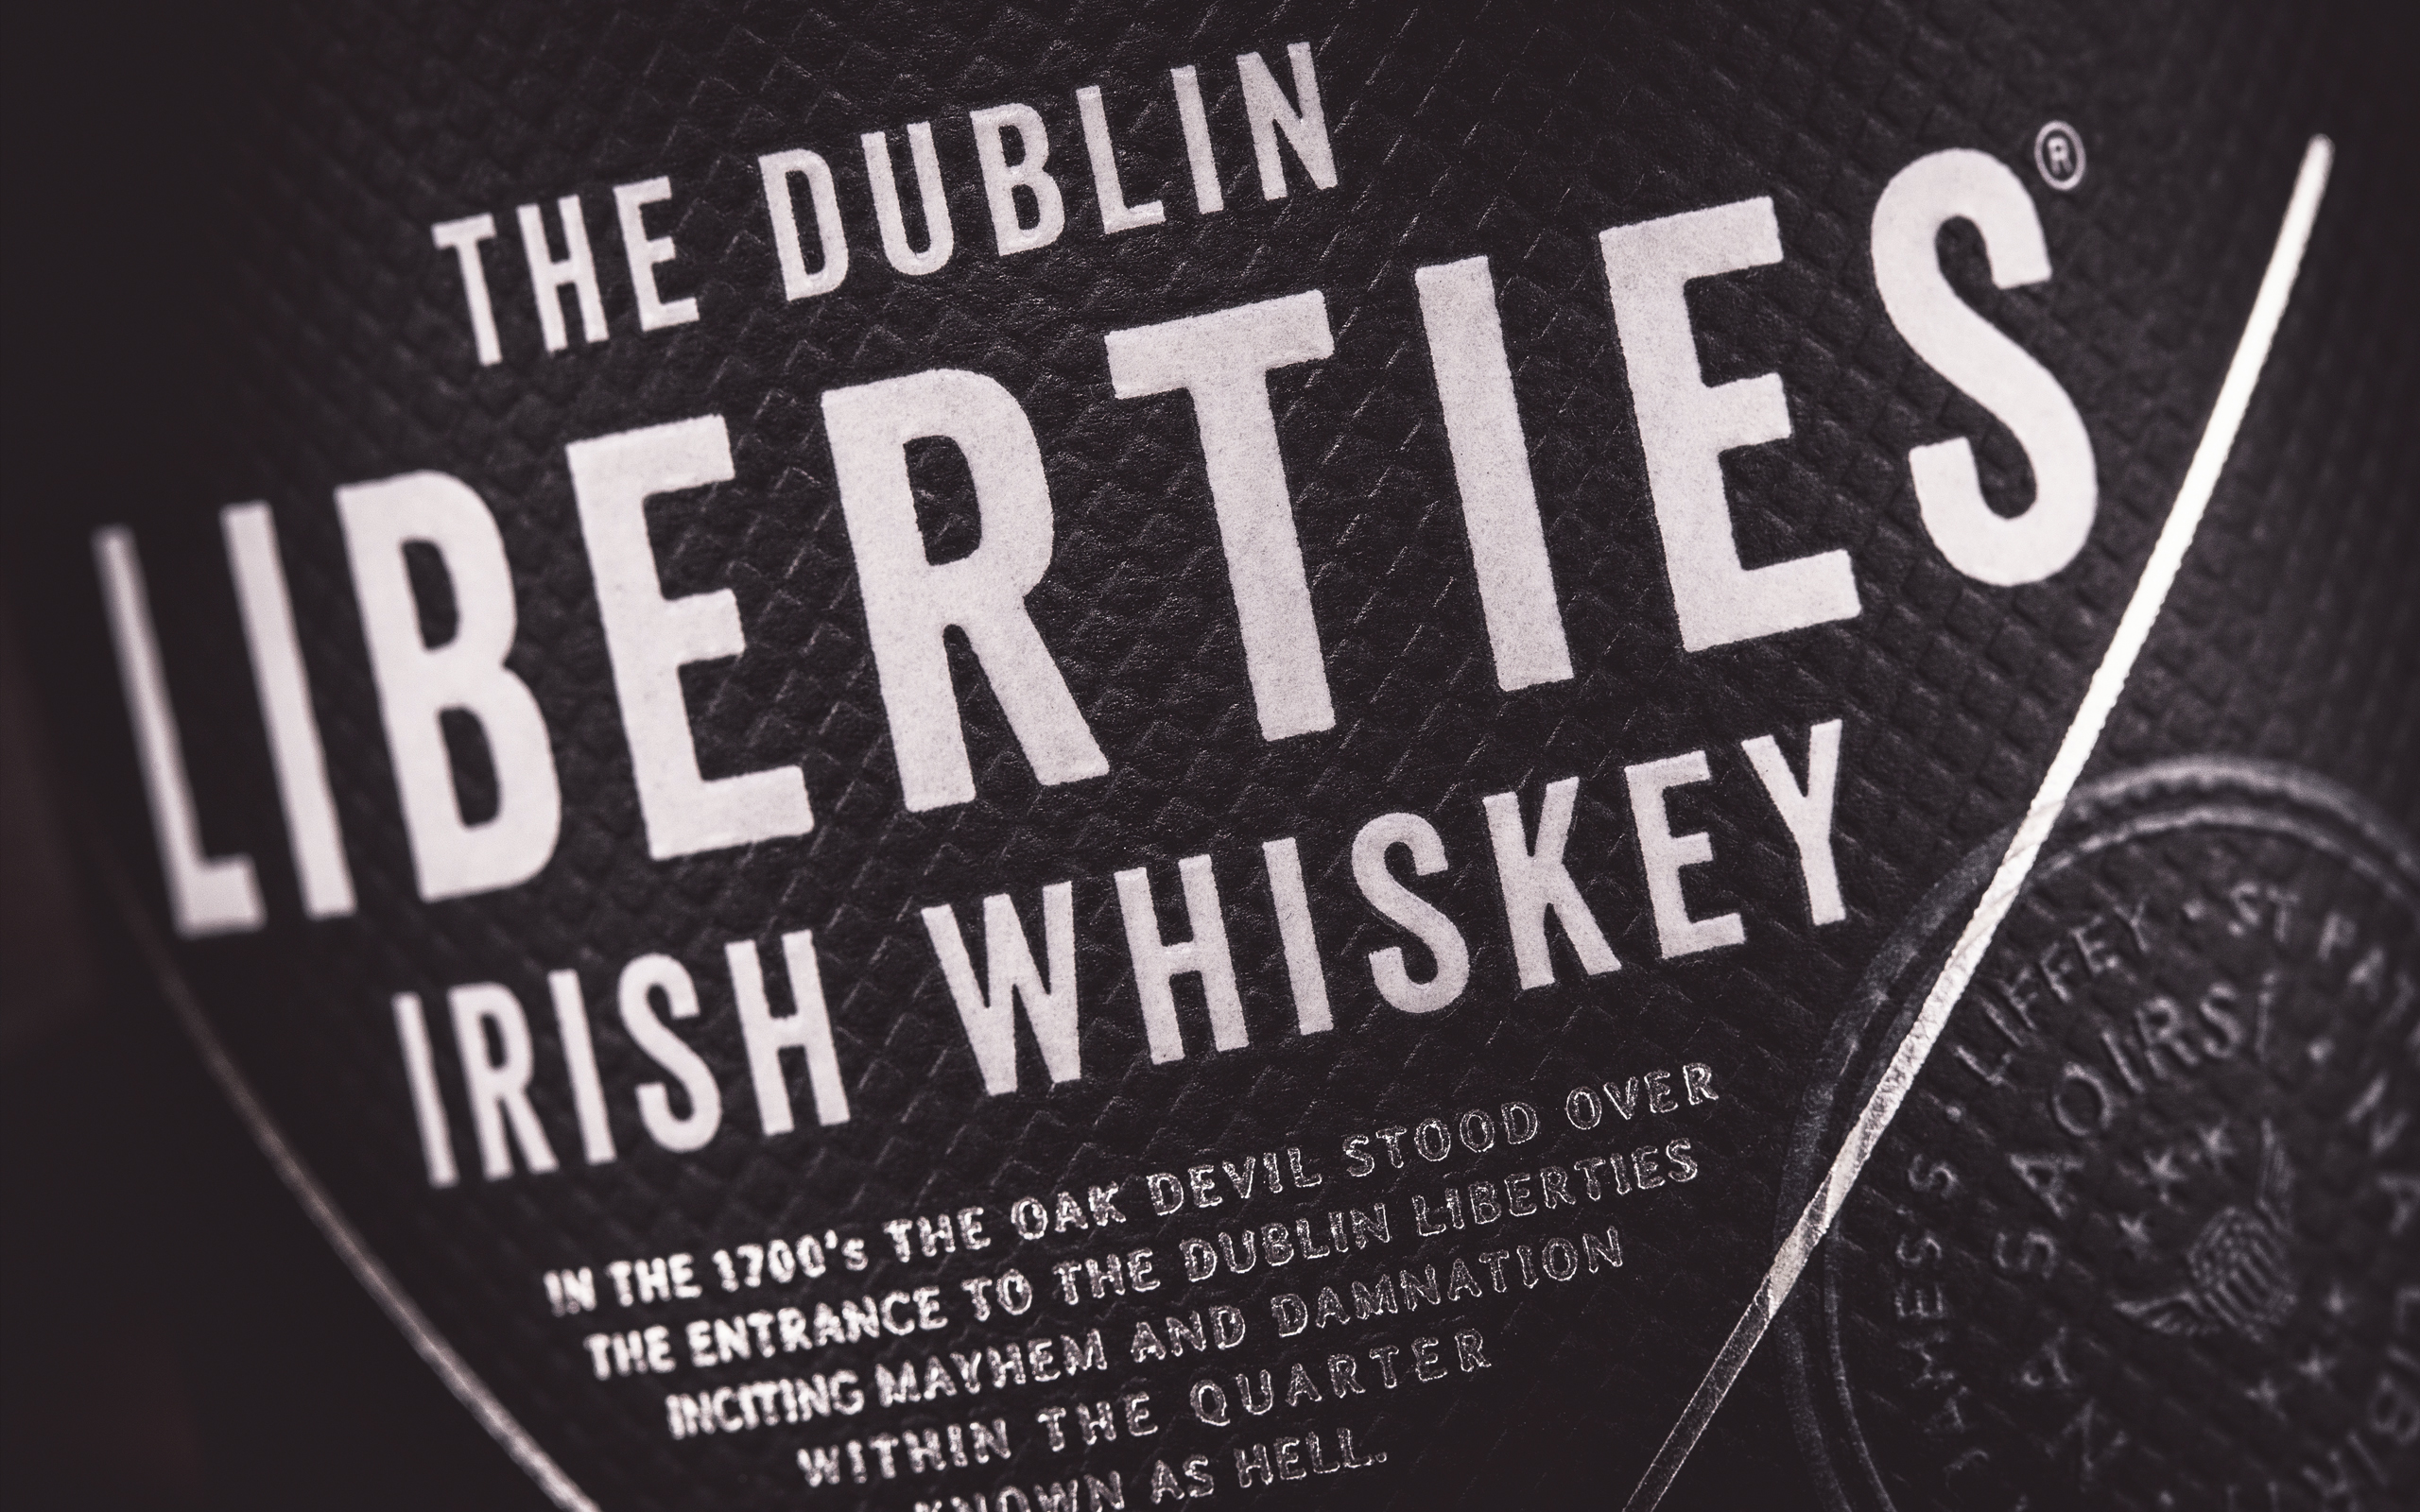 The Dublin Liberties Whiskey